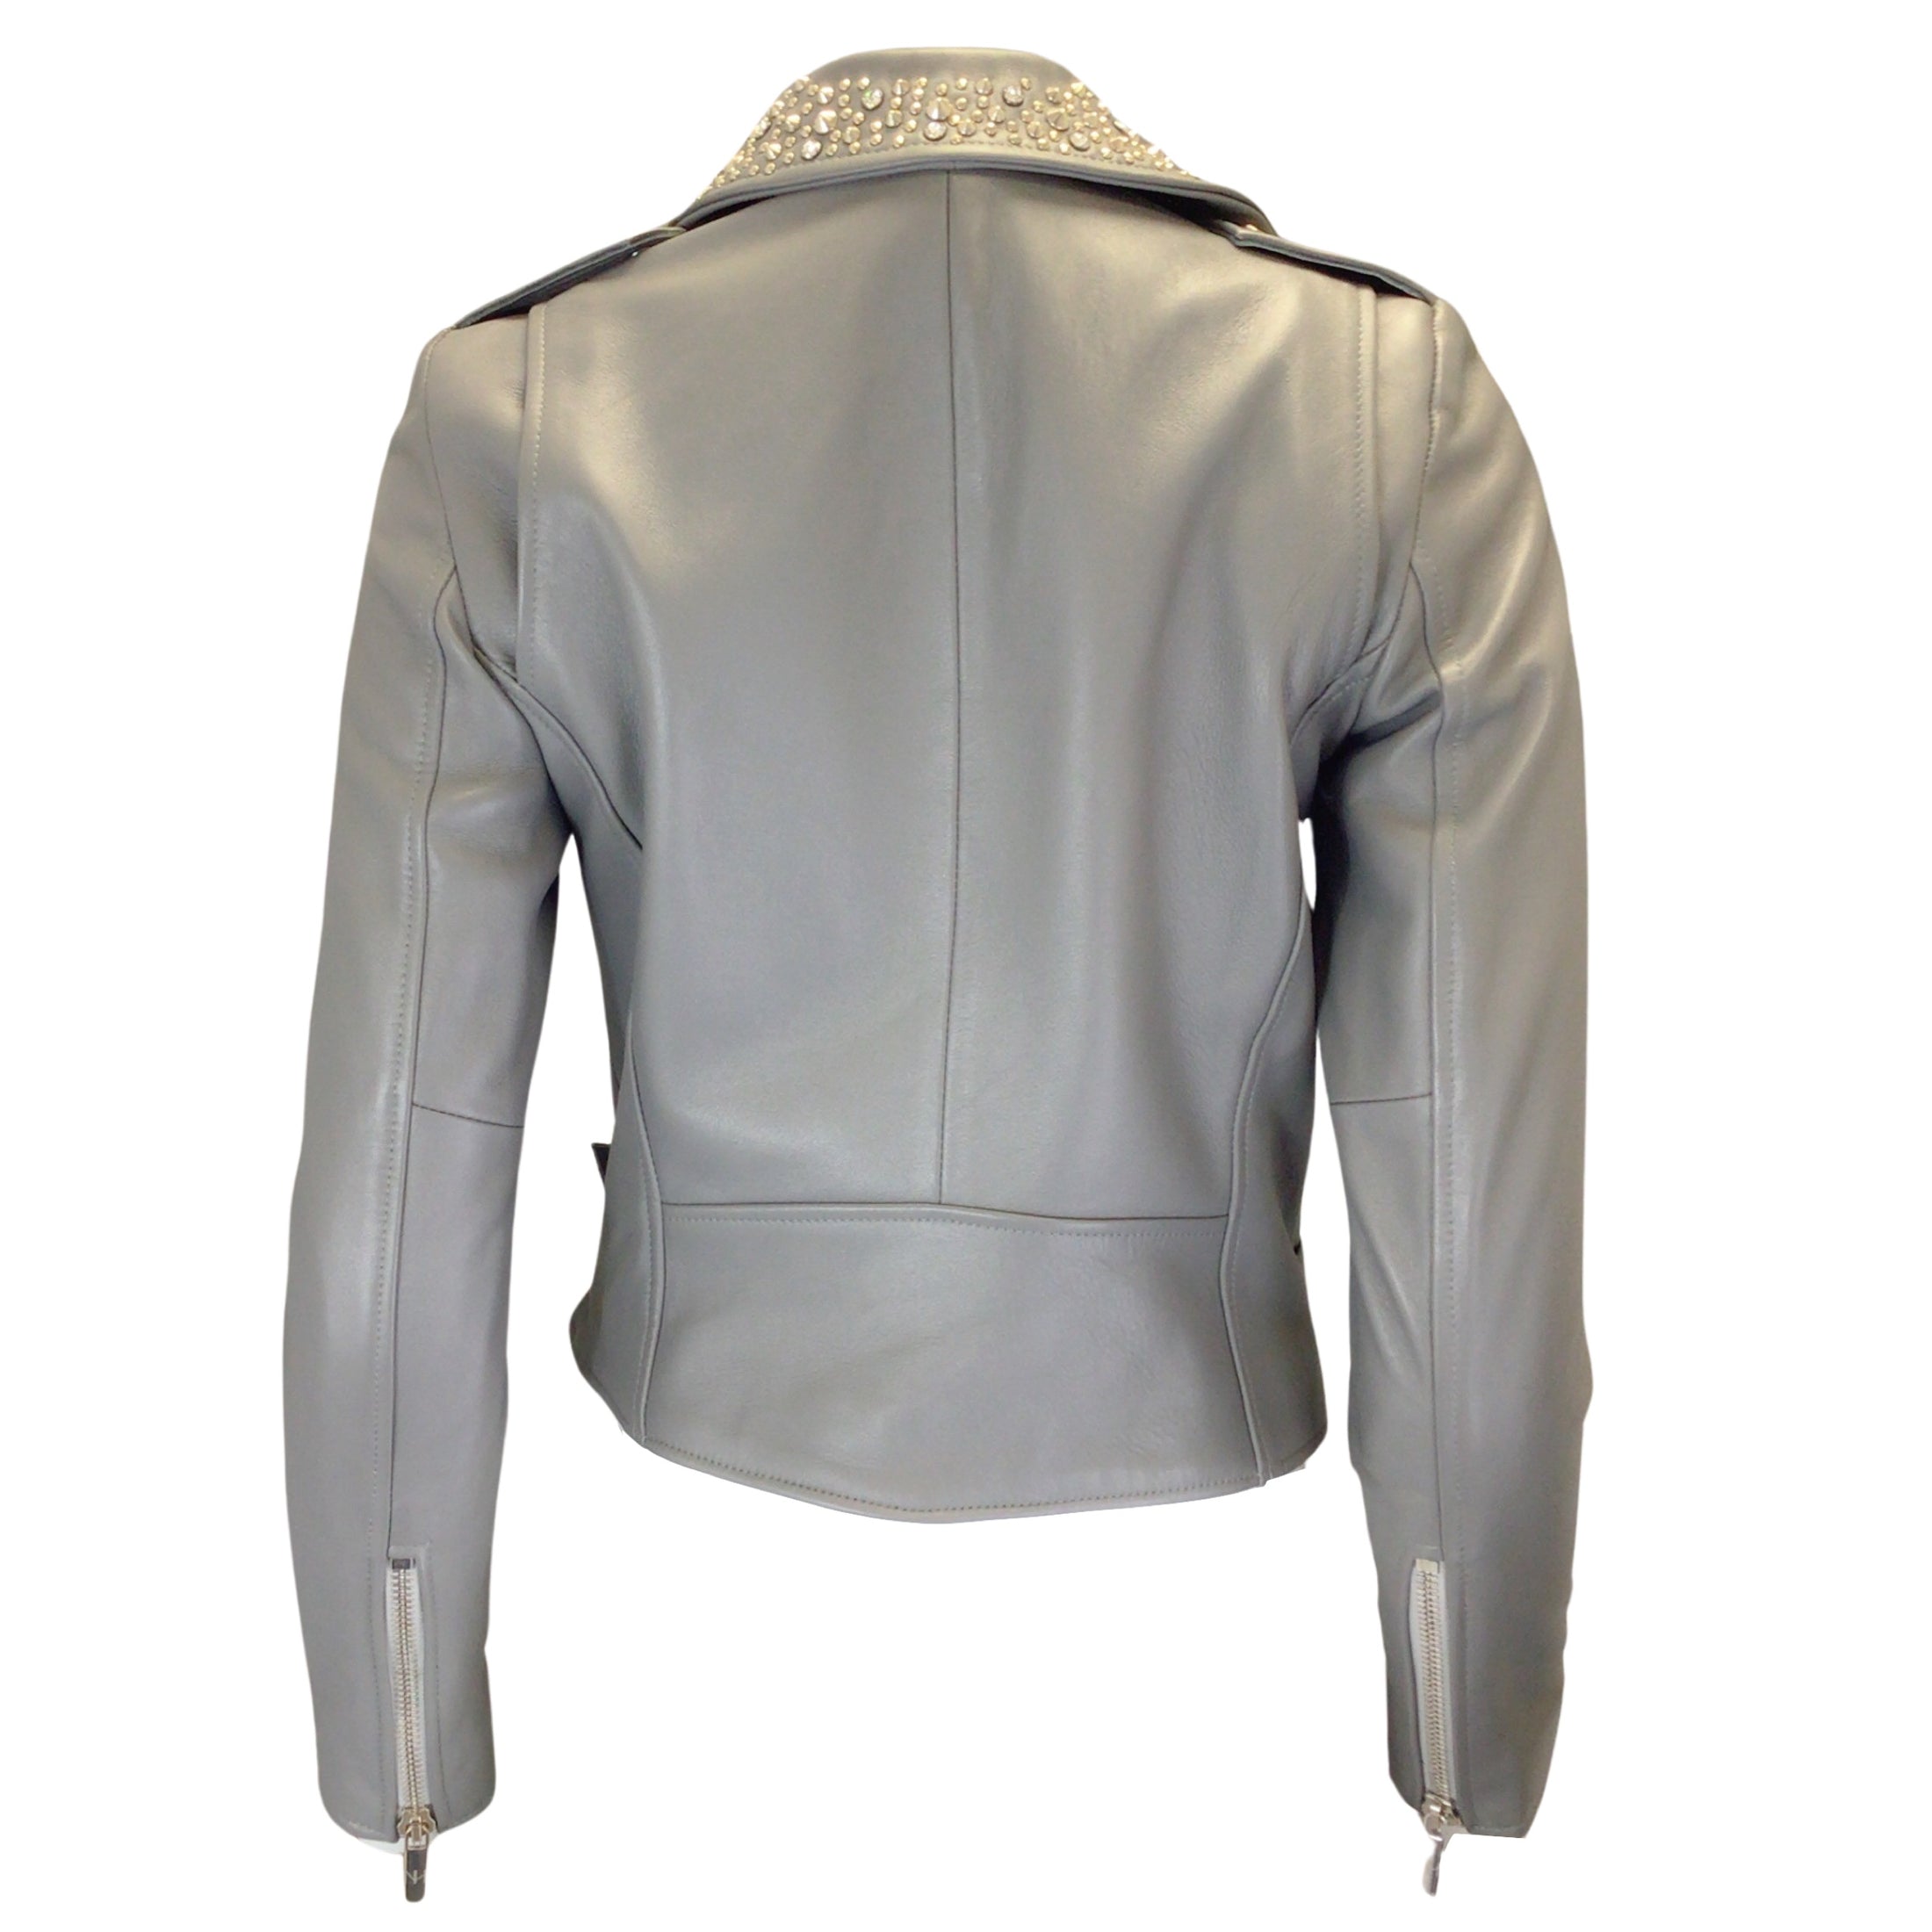 Nour Hammour Grey / Silver Studded Moto Zip Lambskin Leather Jacket